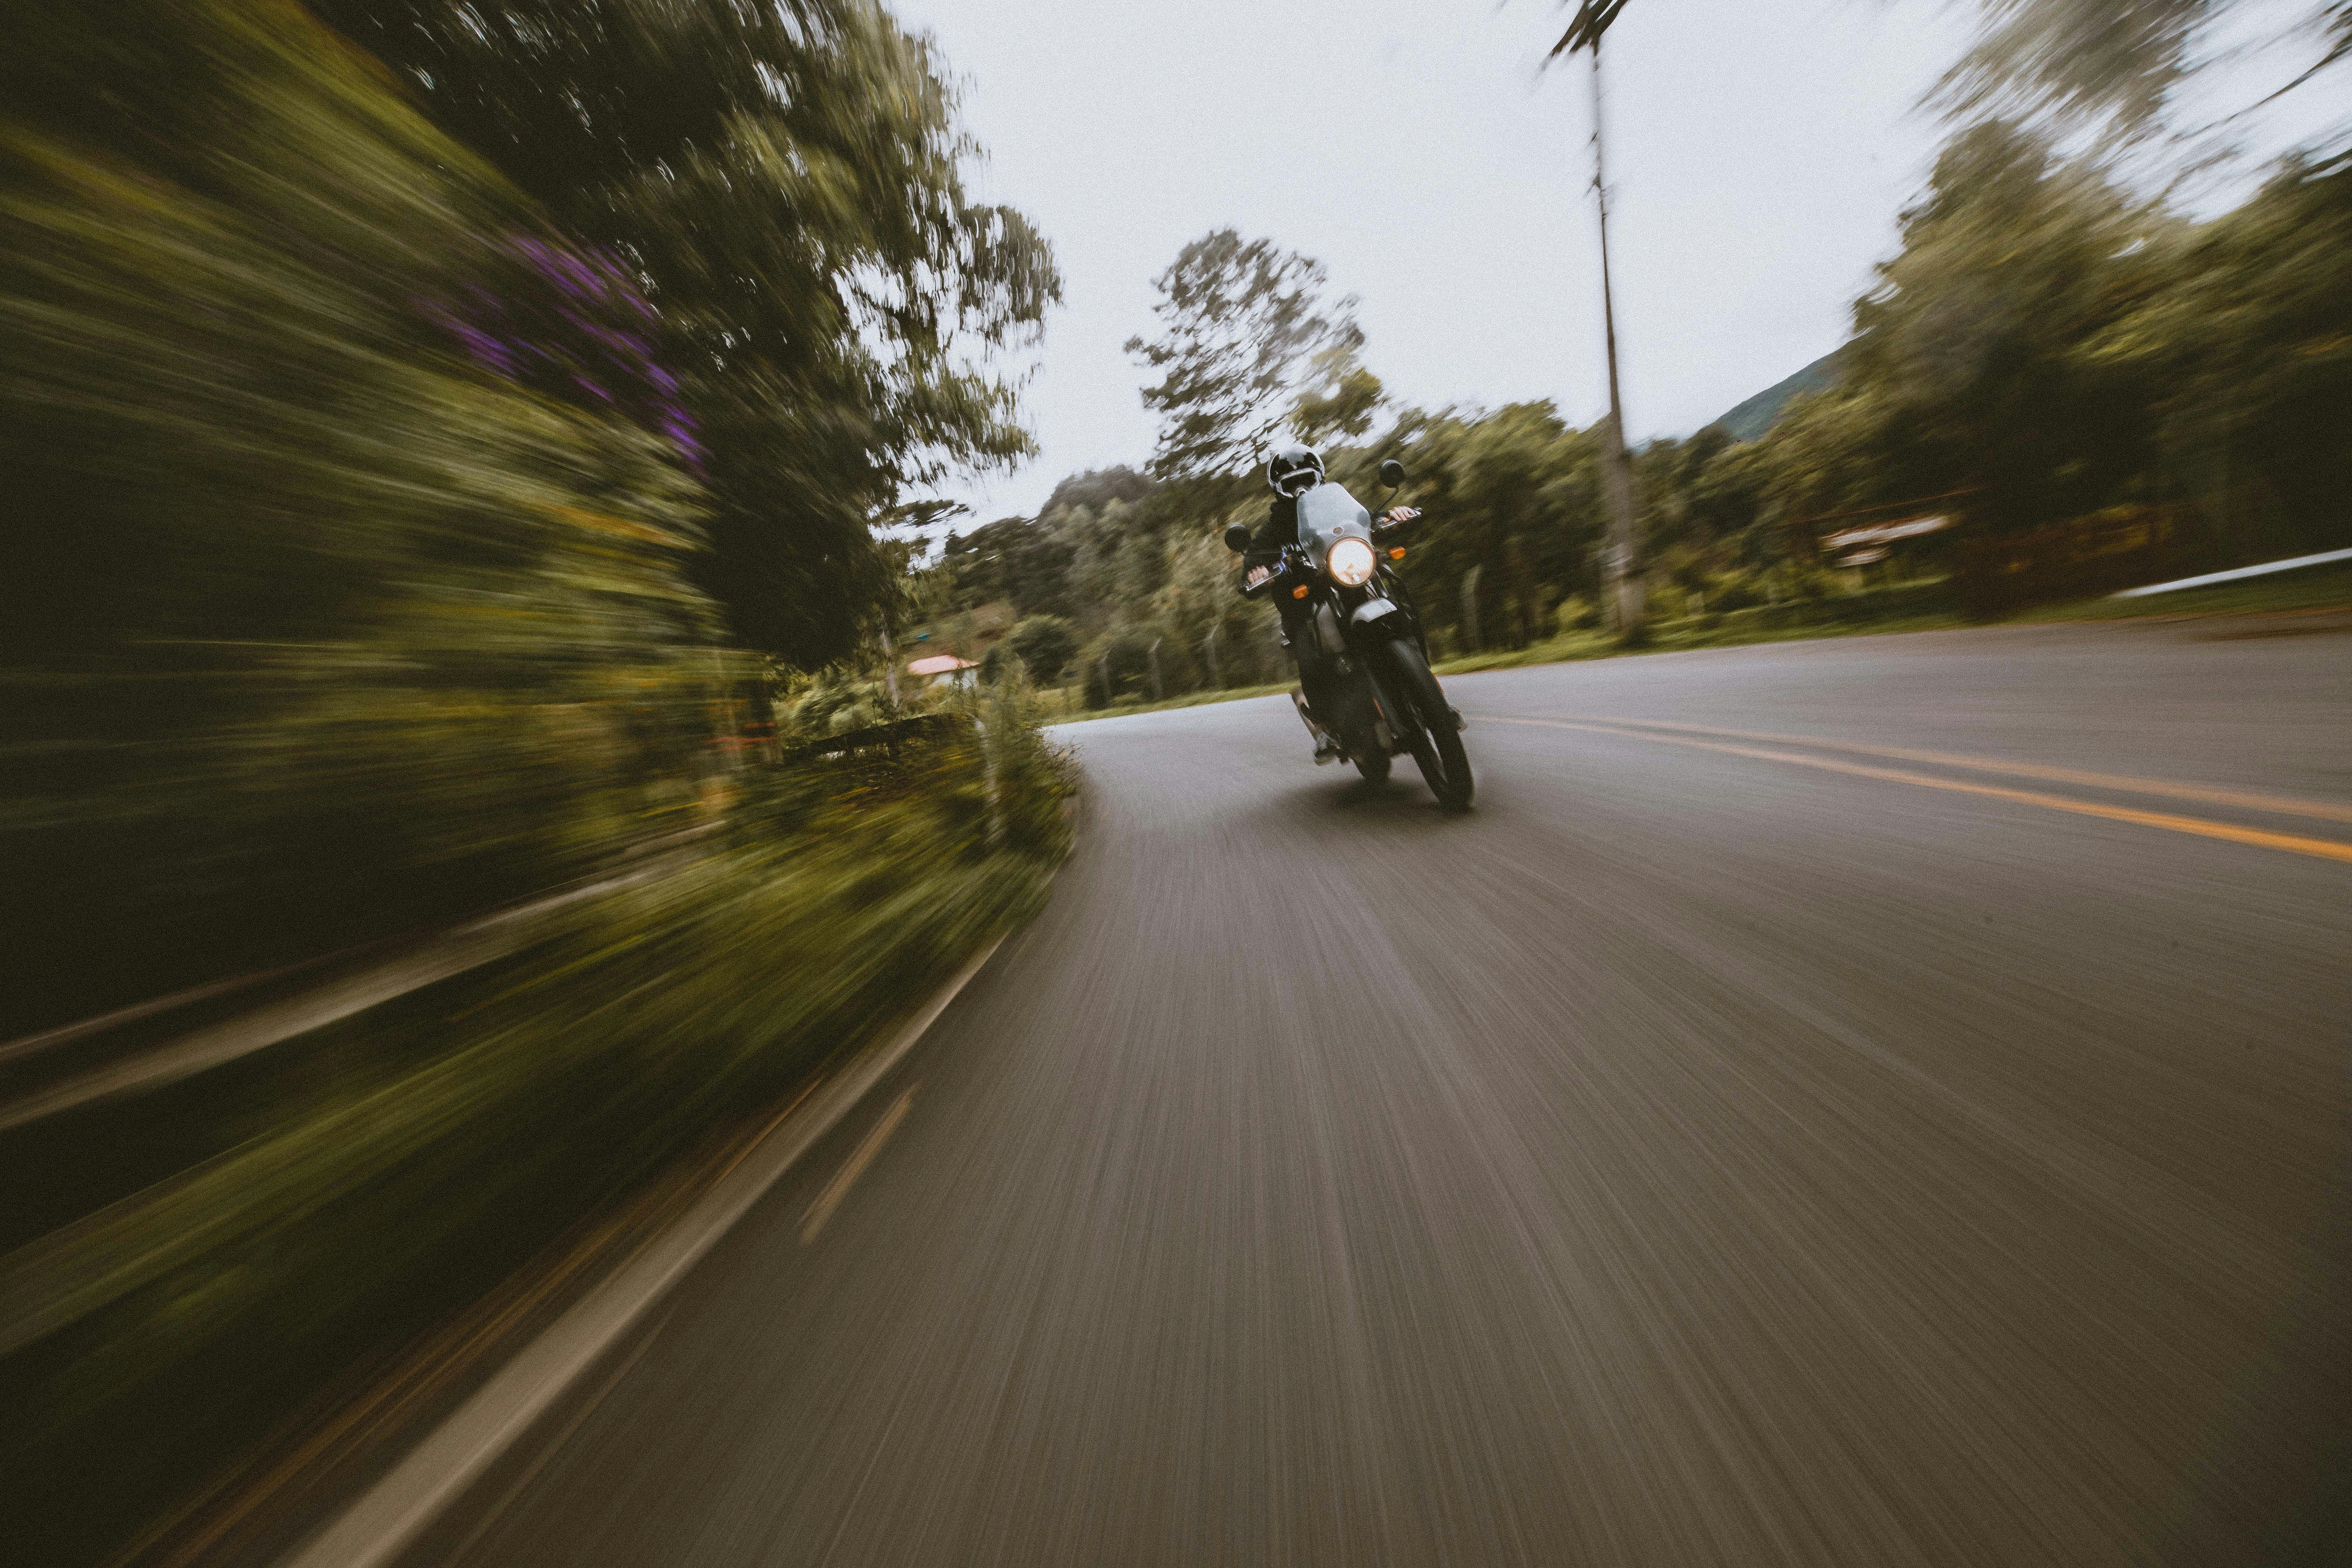 man riding motorcycle on road during daytime